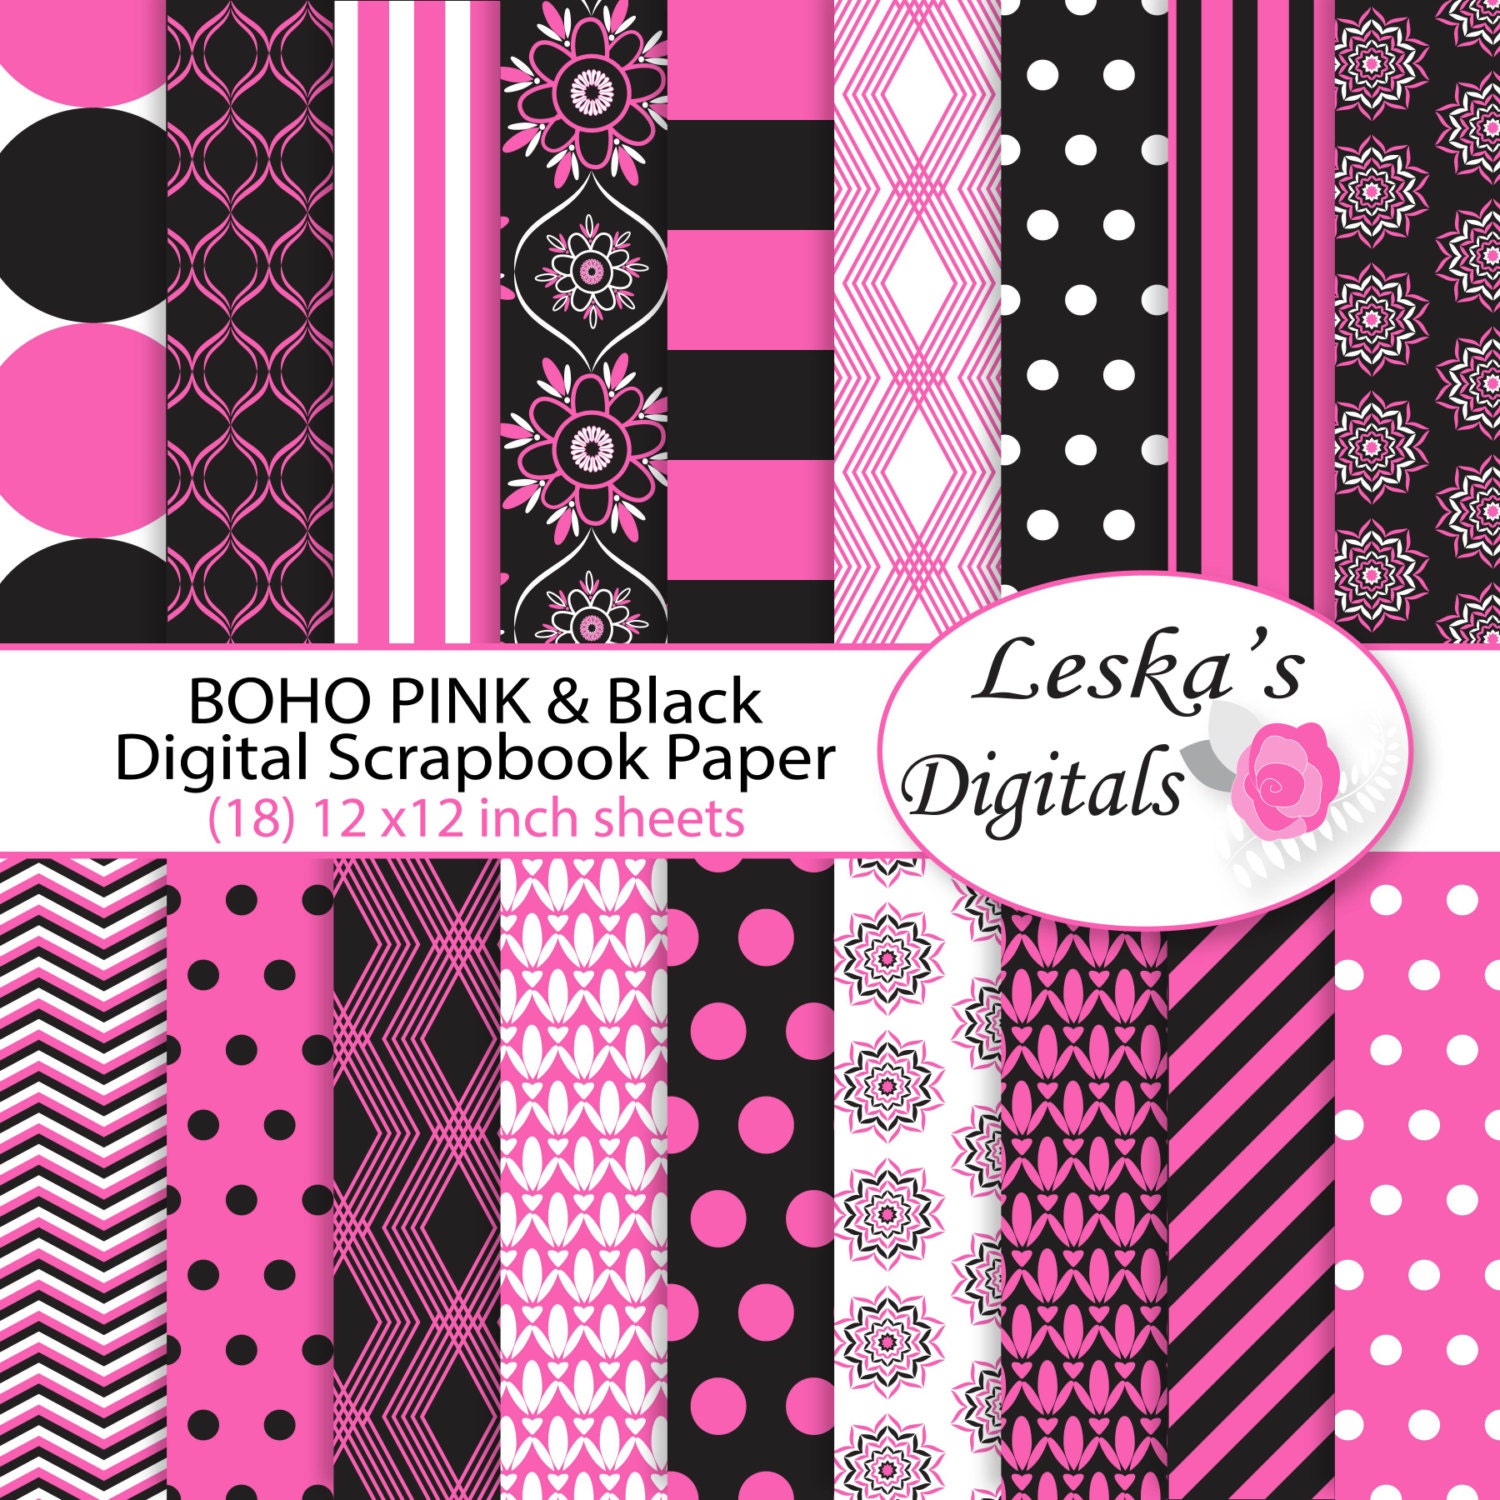 Hot Pink Black Digital Paper Scrapbook Paper in Bohemian Style